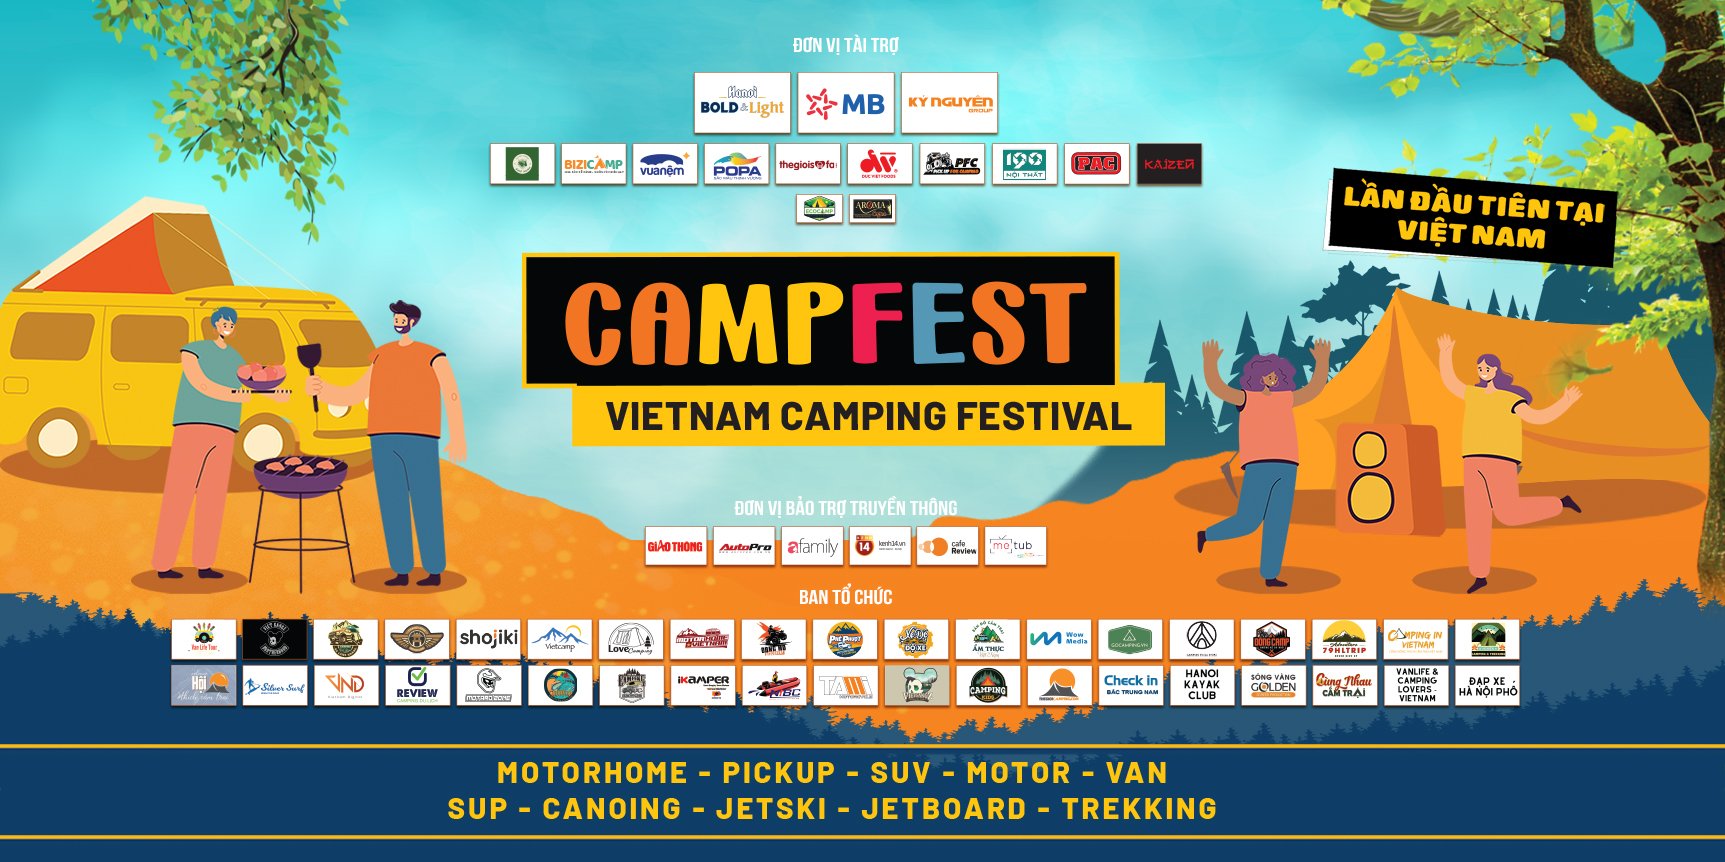 Lễ hội cắm trại Việt Nam – Vietnam Camping Festival 2021 (CampFest)